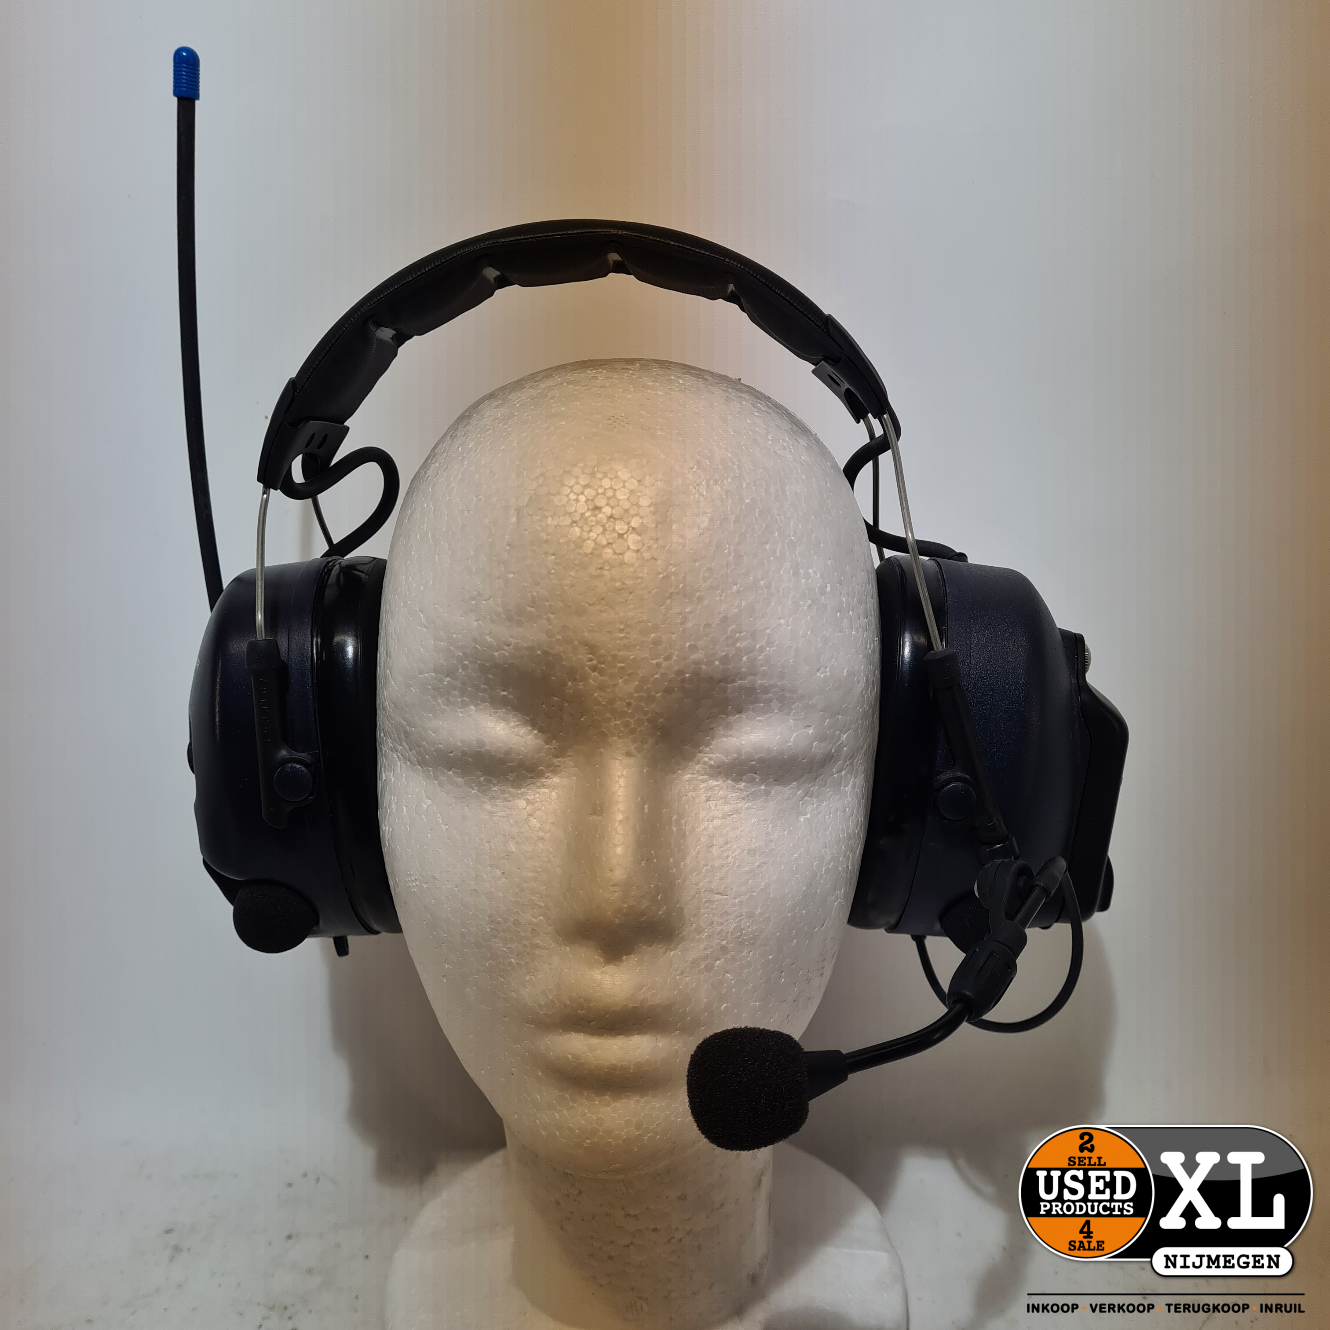 Aardrijkskunde perzik spoelen 3M Peltor WS Lite-Com Bluetooth Headset Met Hoofdband Blauw | Nette Staat -  Used Products Nijmegen XL